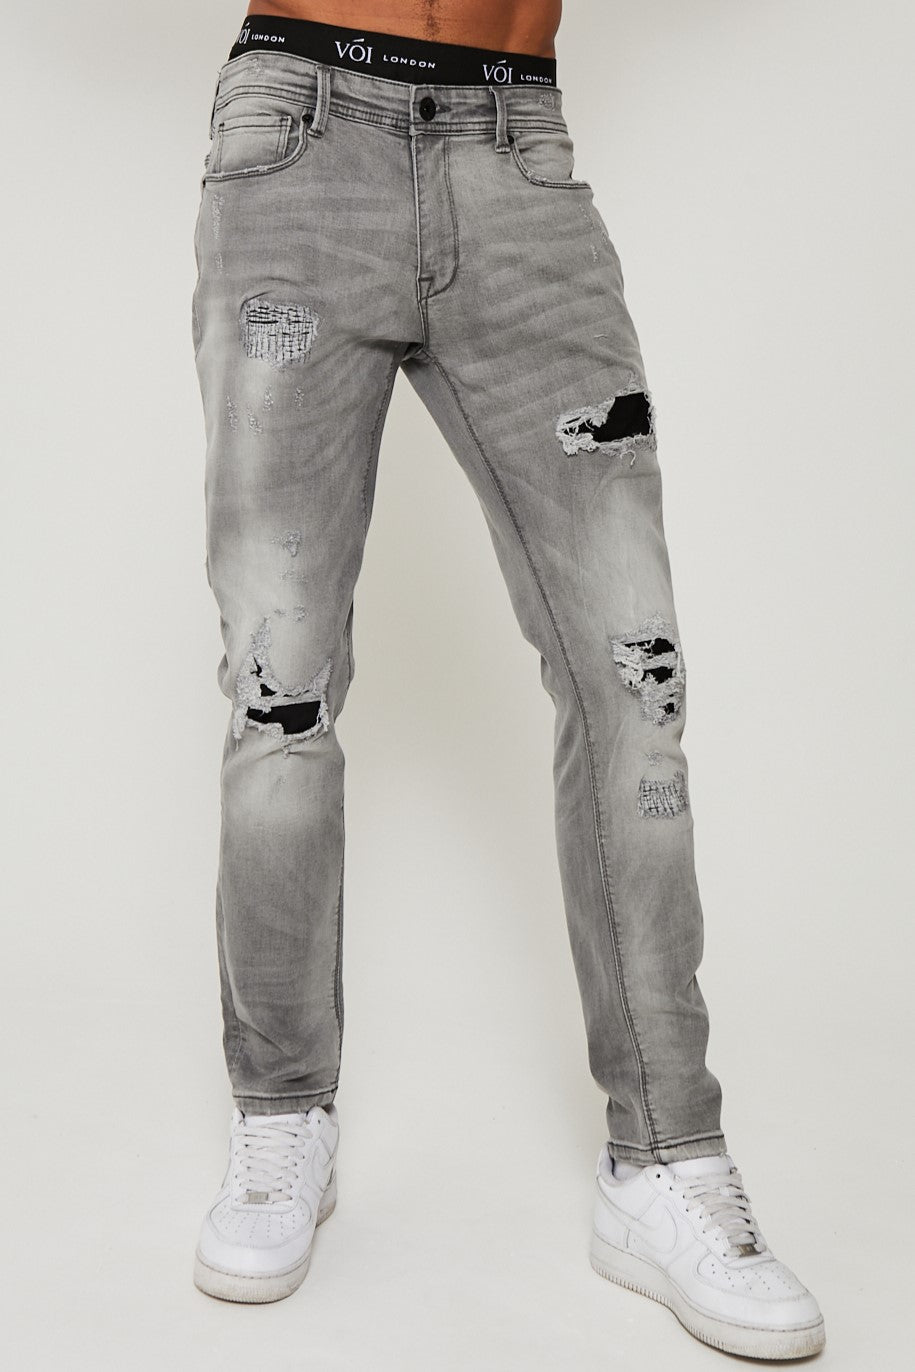 Holborn Jeans - Grey